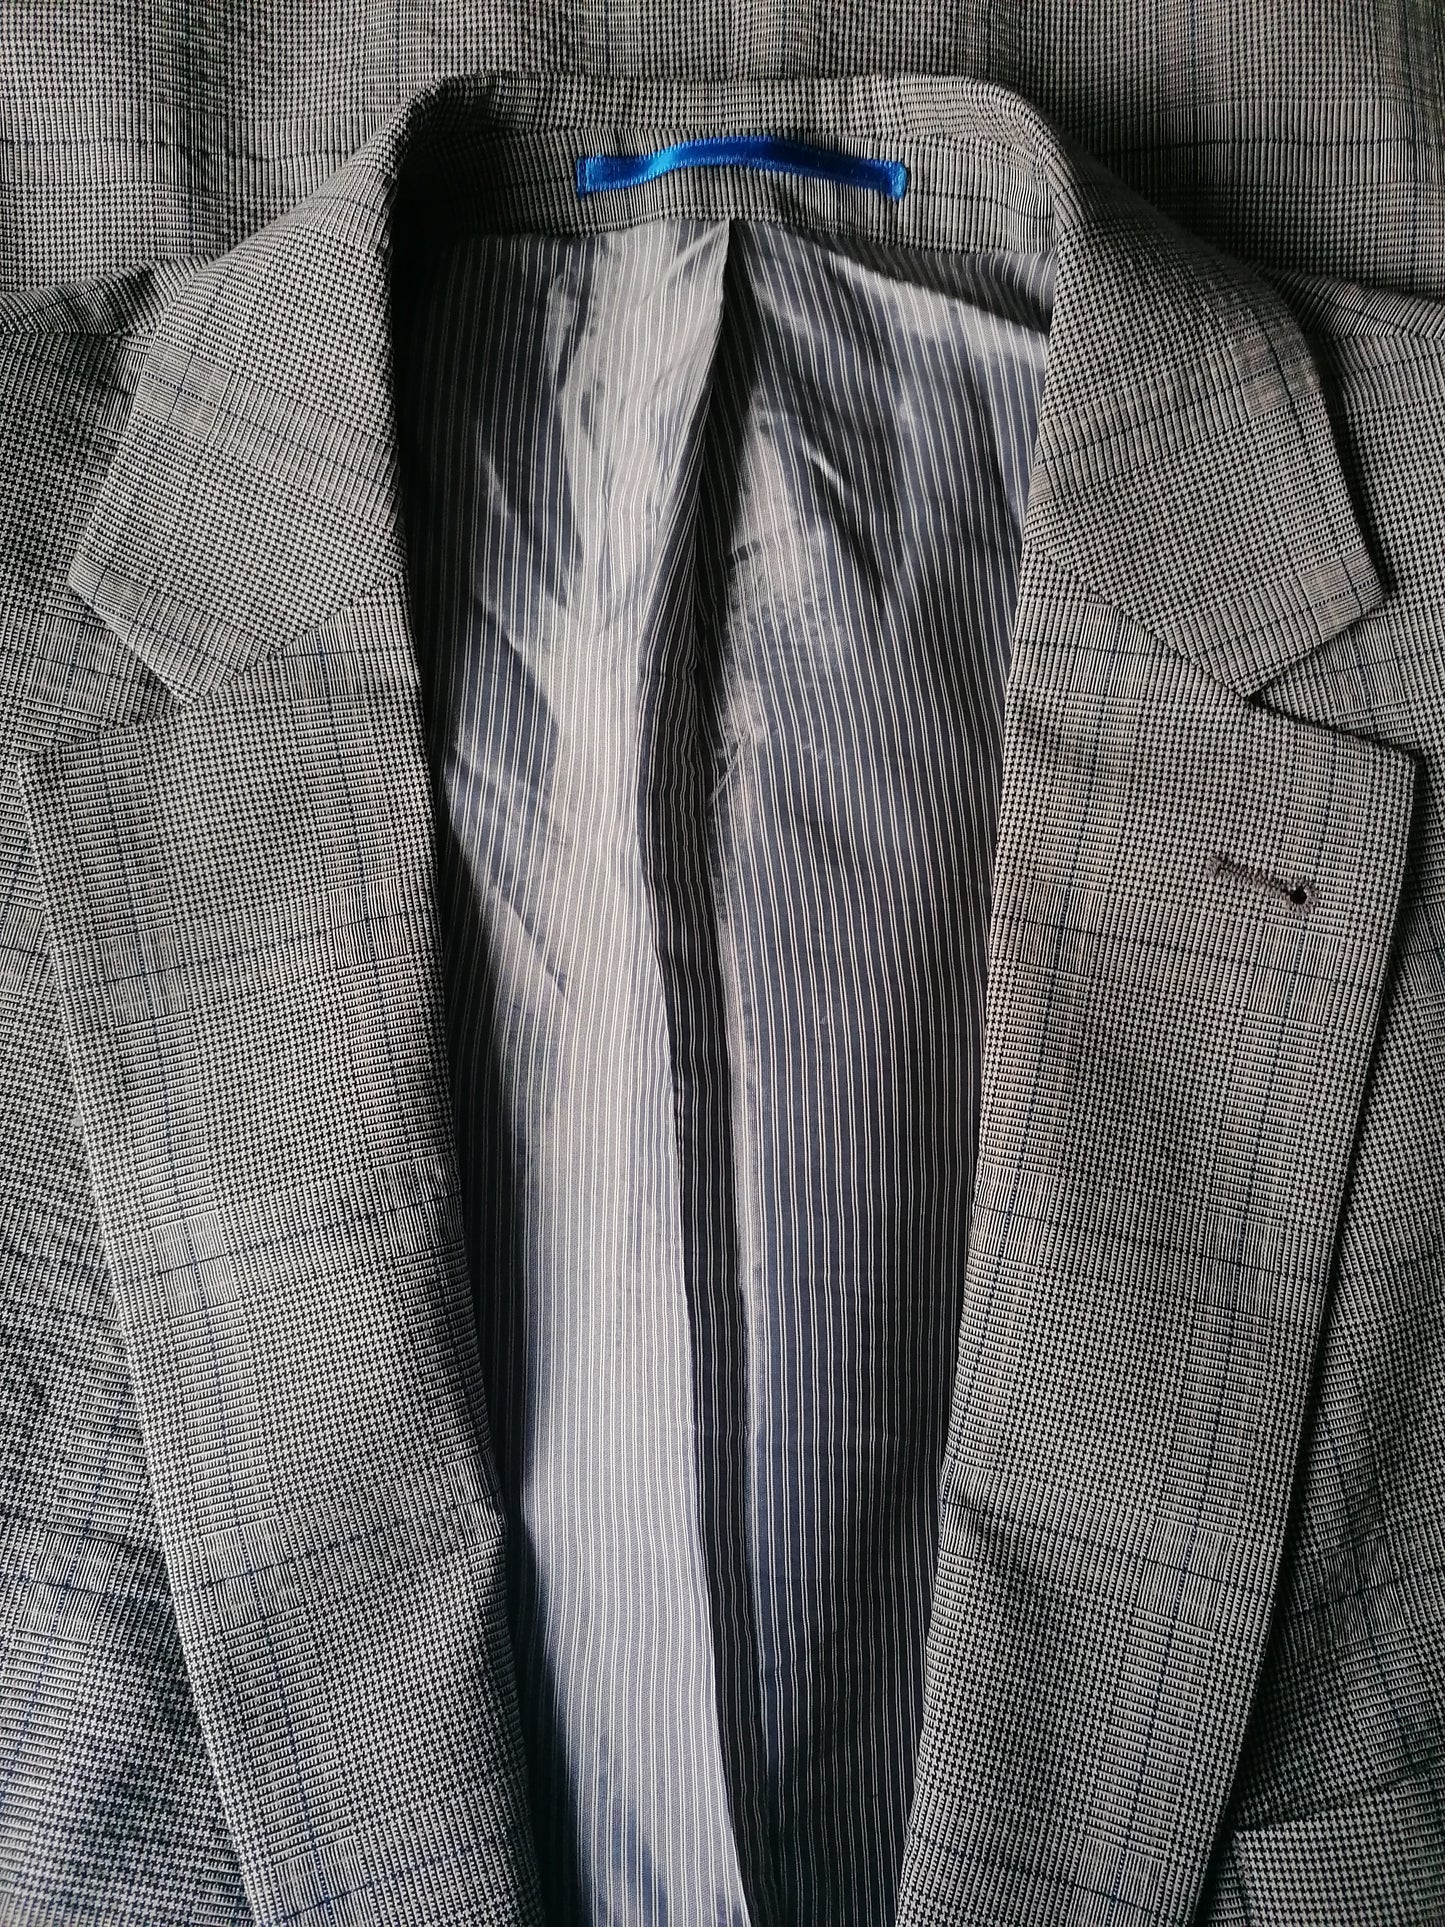 Bogart woolen jacket. Gray black blue checked. Size 27 (54 / L) 57% Wool.